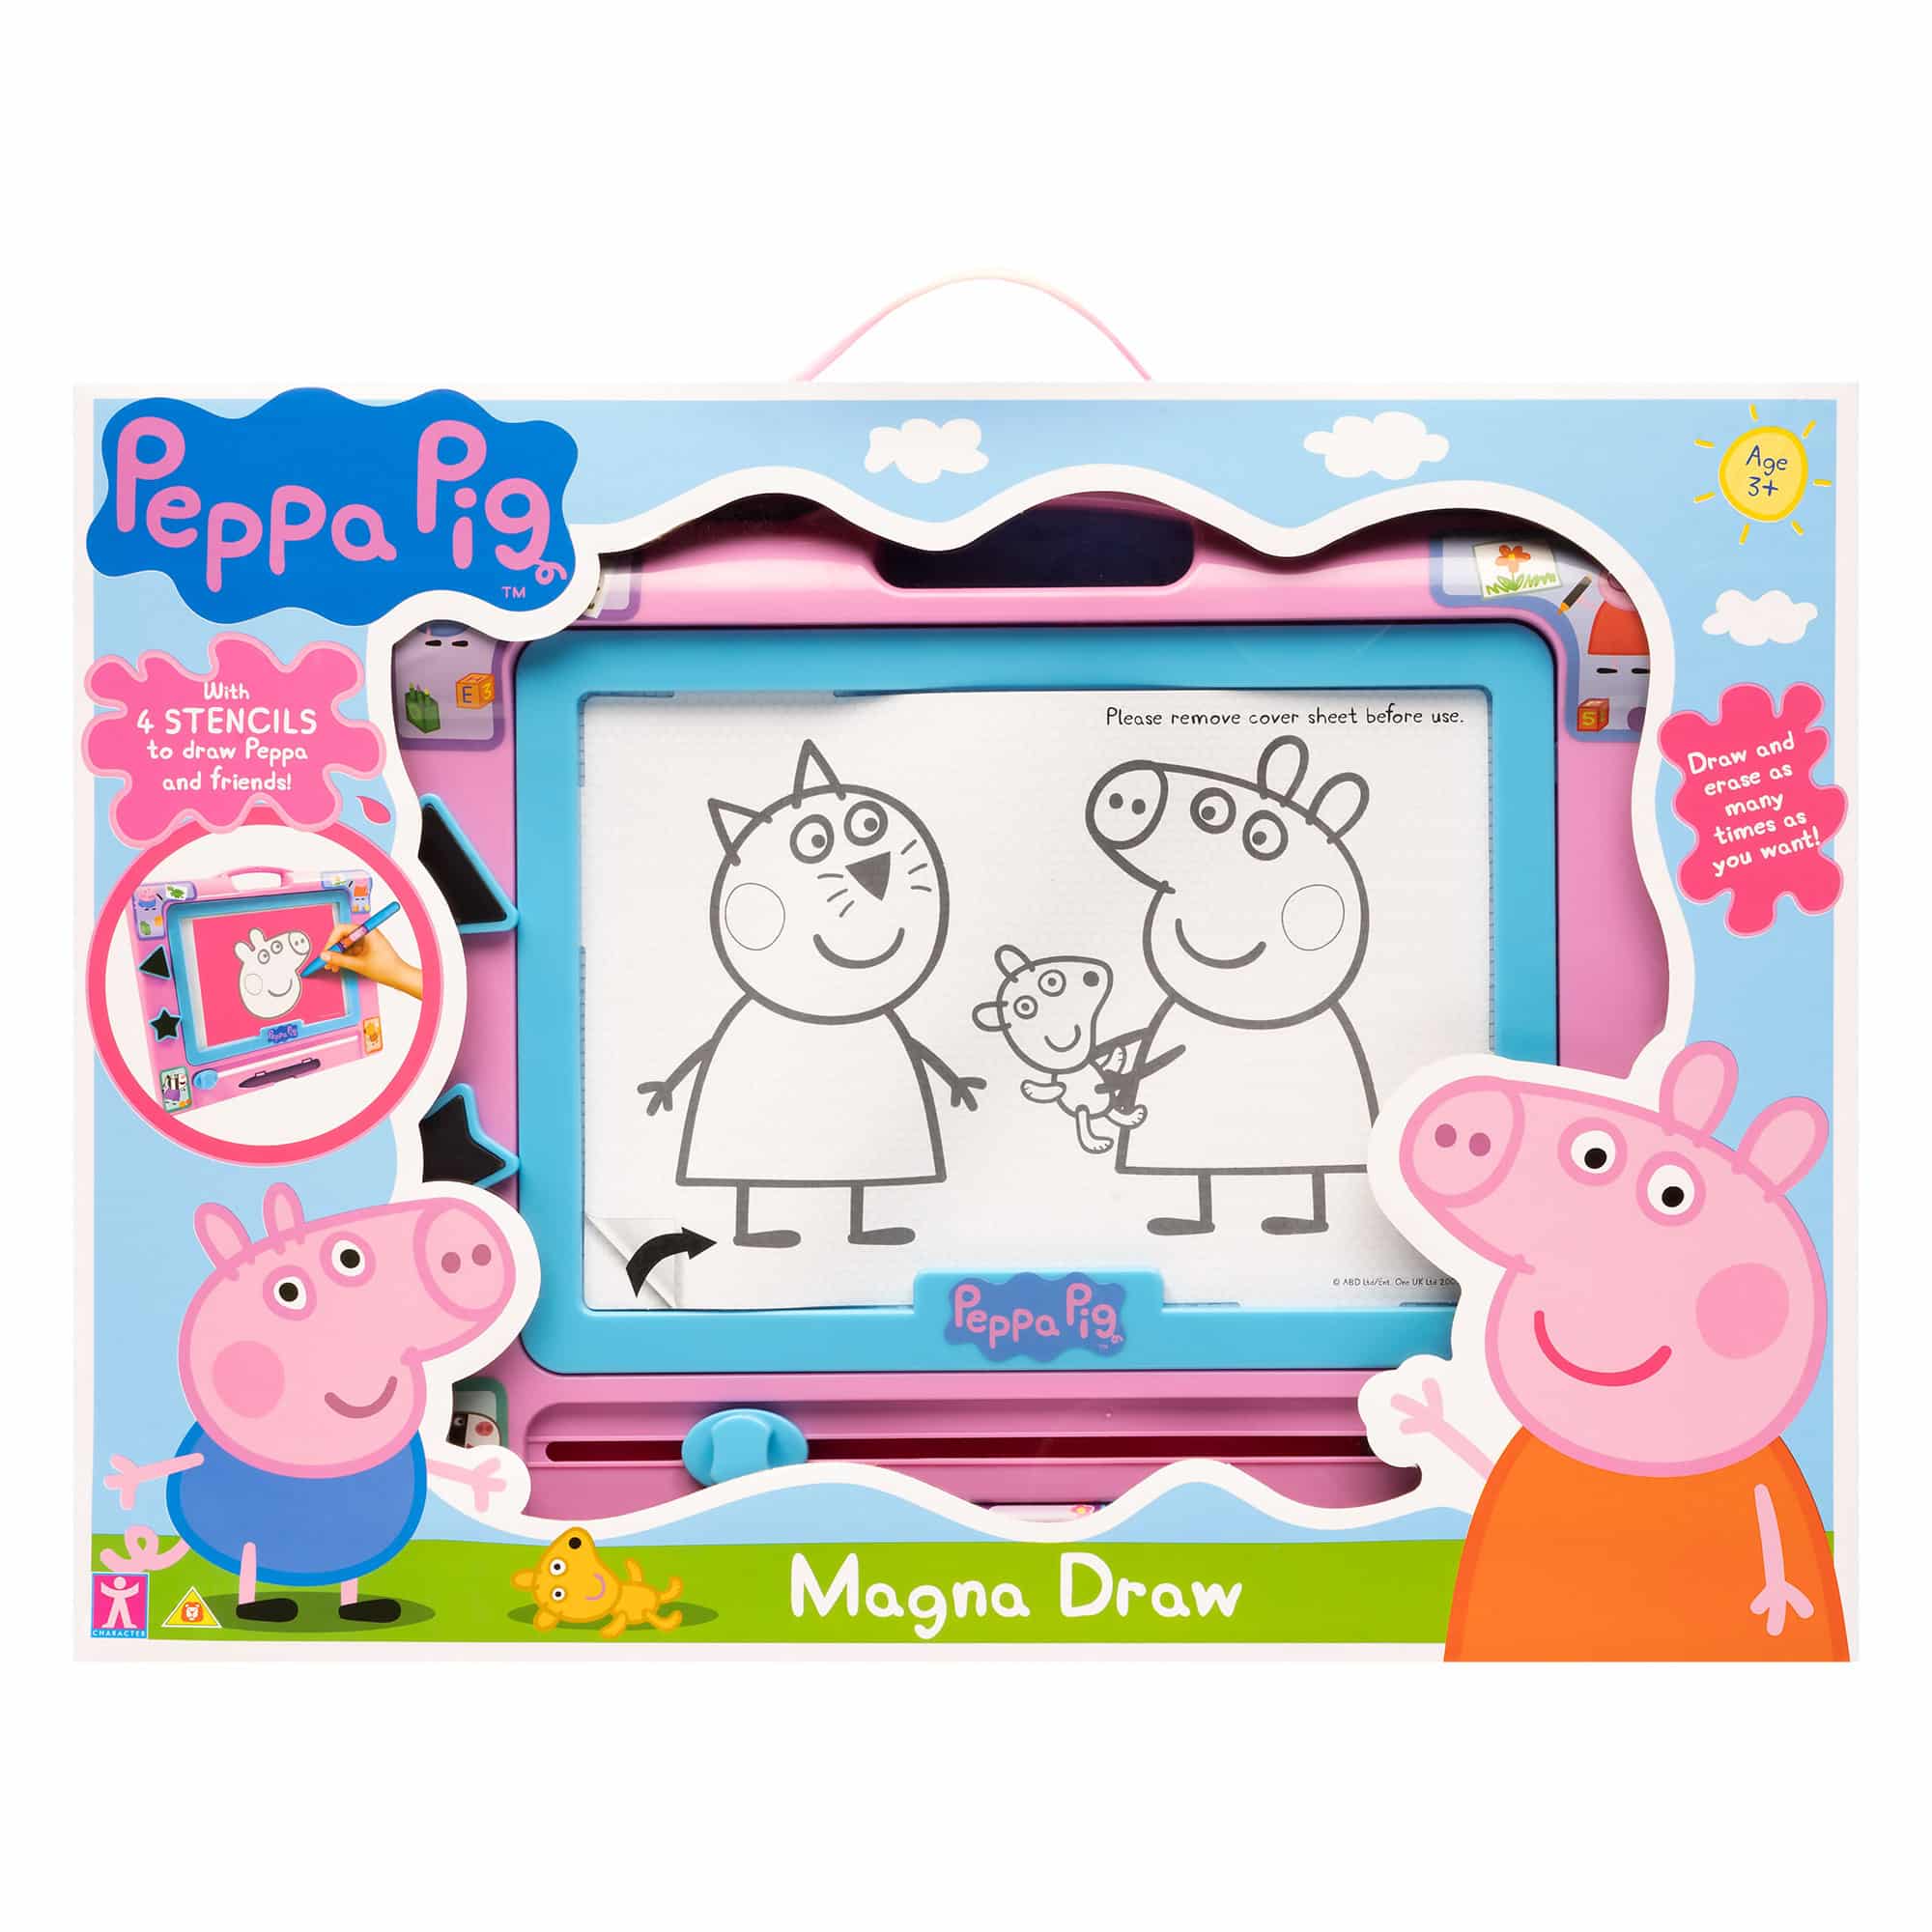 Peppa Pig - Magna Draw